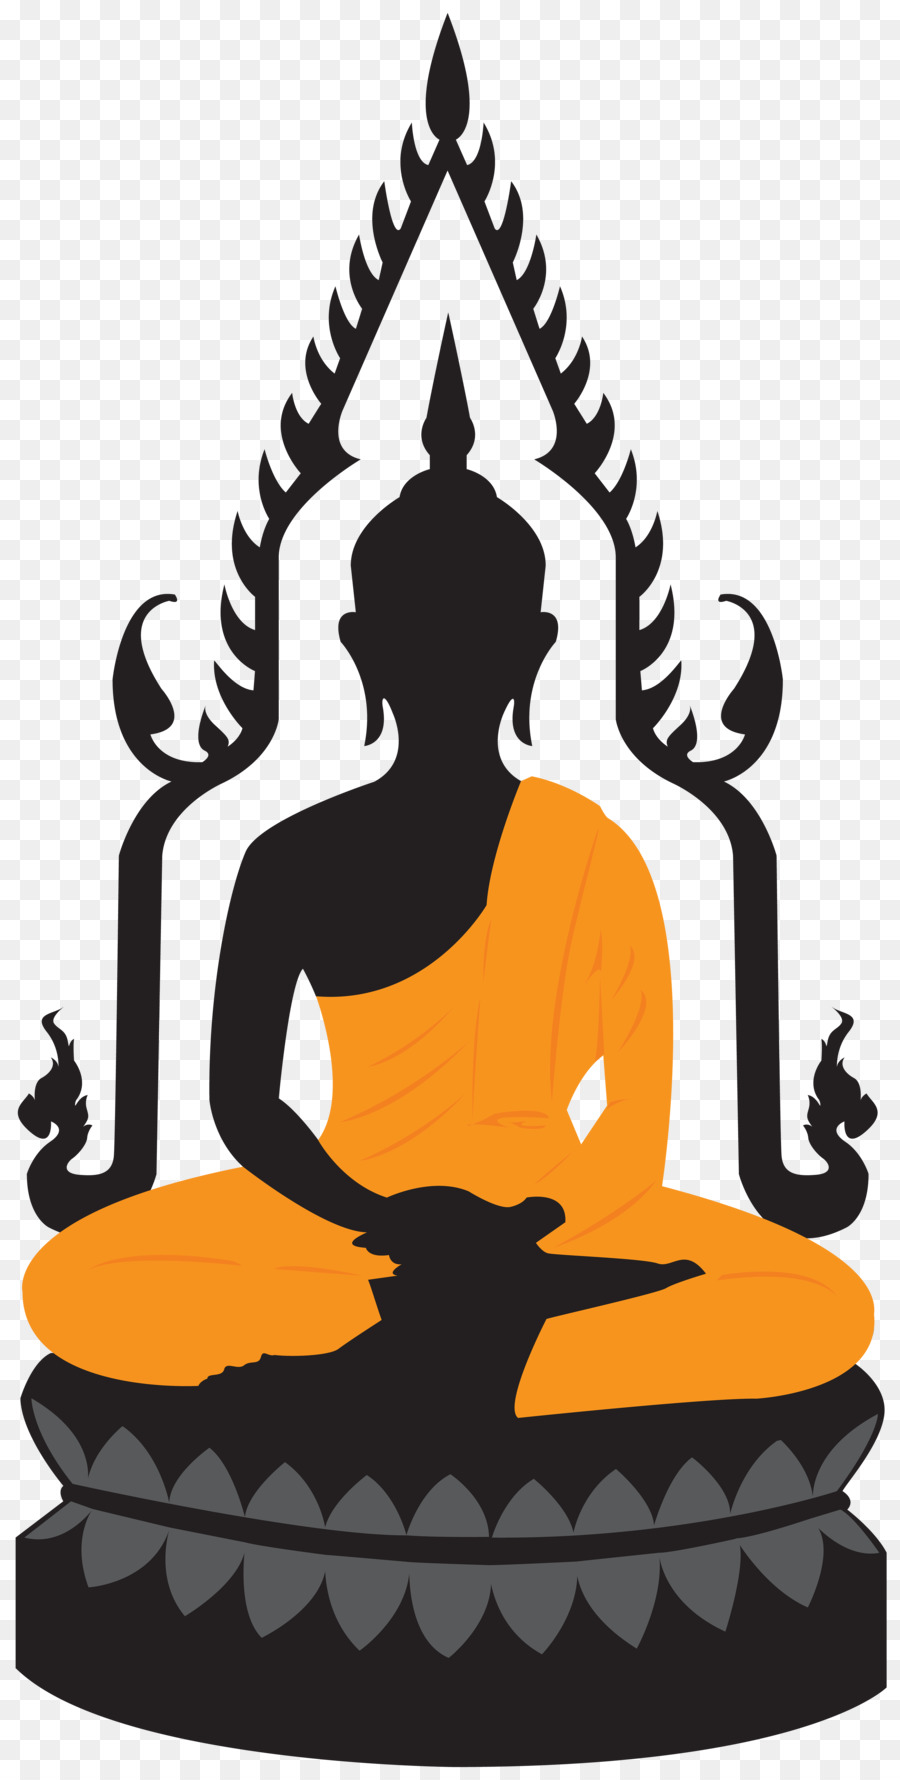 Buddhism Buddhist meditation Clip art - Buddhism png download - 4045*8000 - Free Transparent Buddhism png Download.